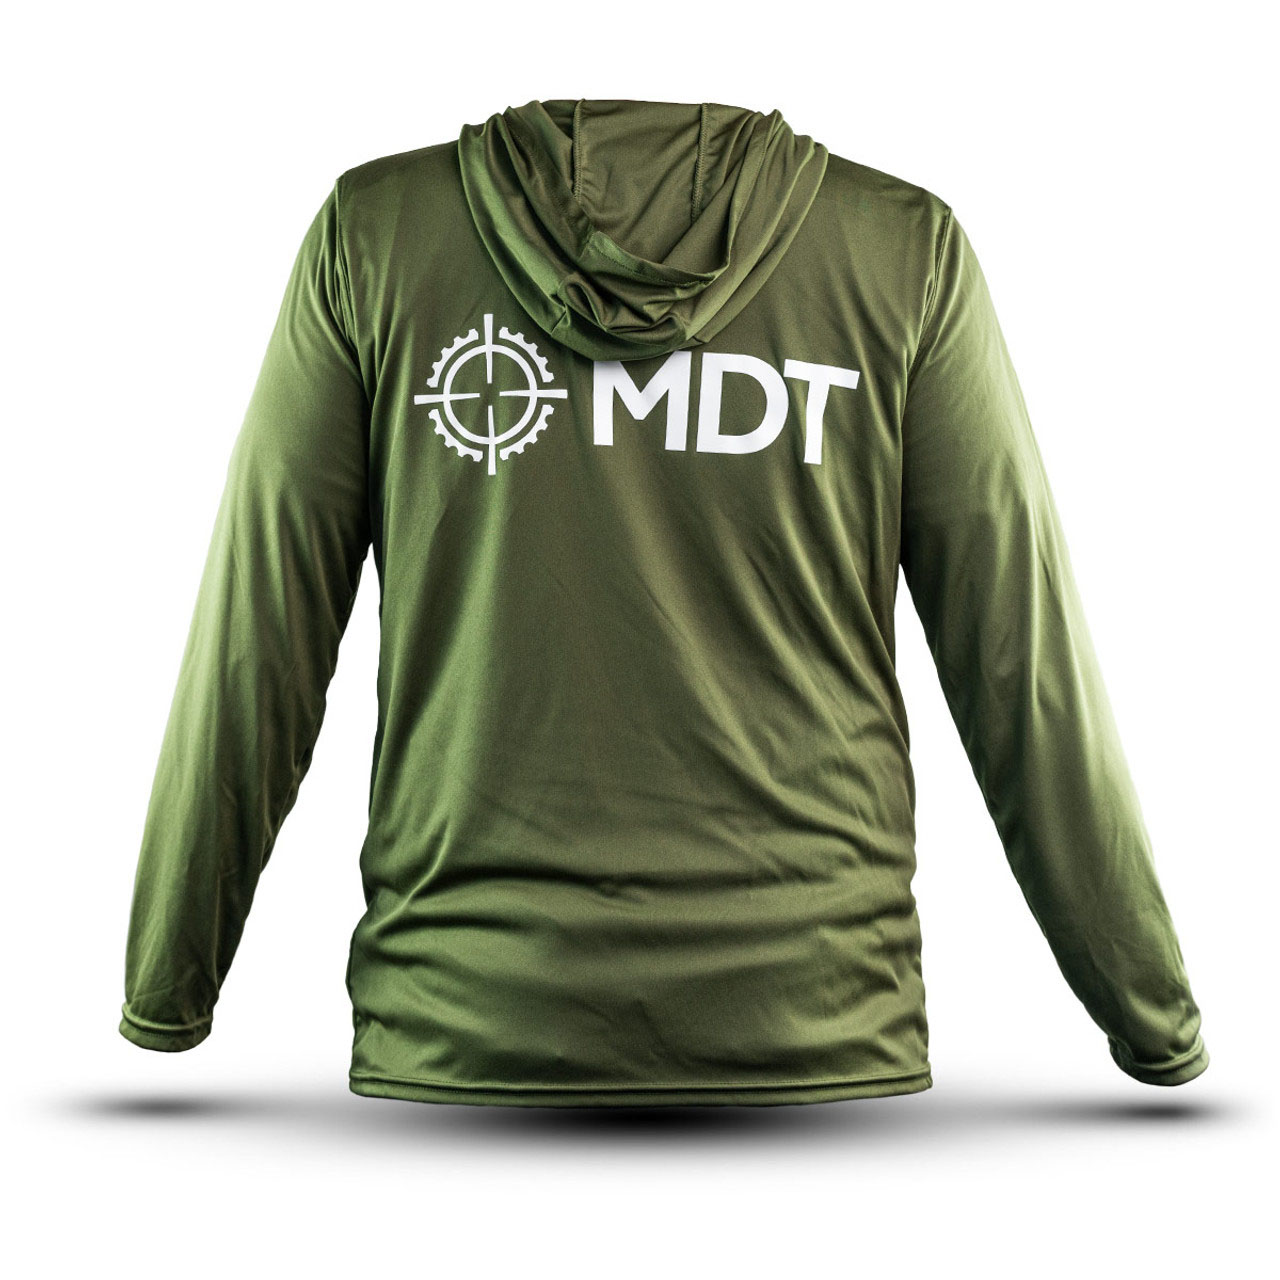 MDT Merchandise - MDT Sun Shirt Hoodies - Unisex -M - GRN